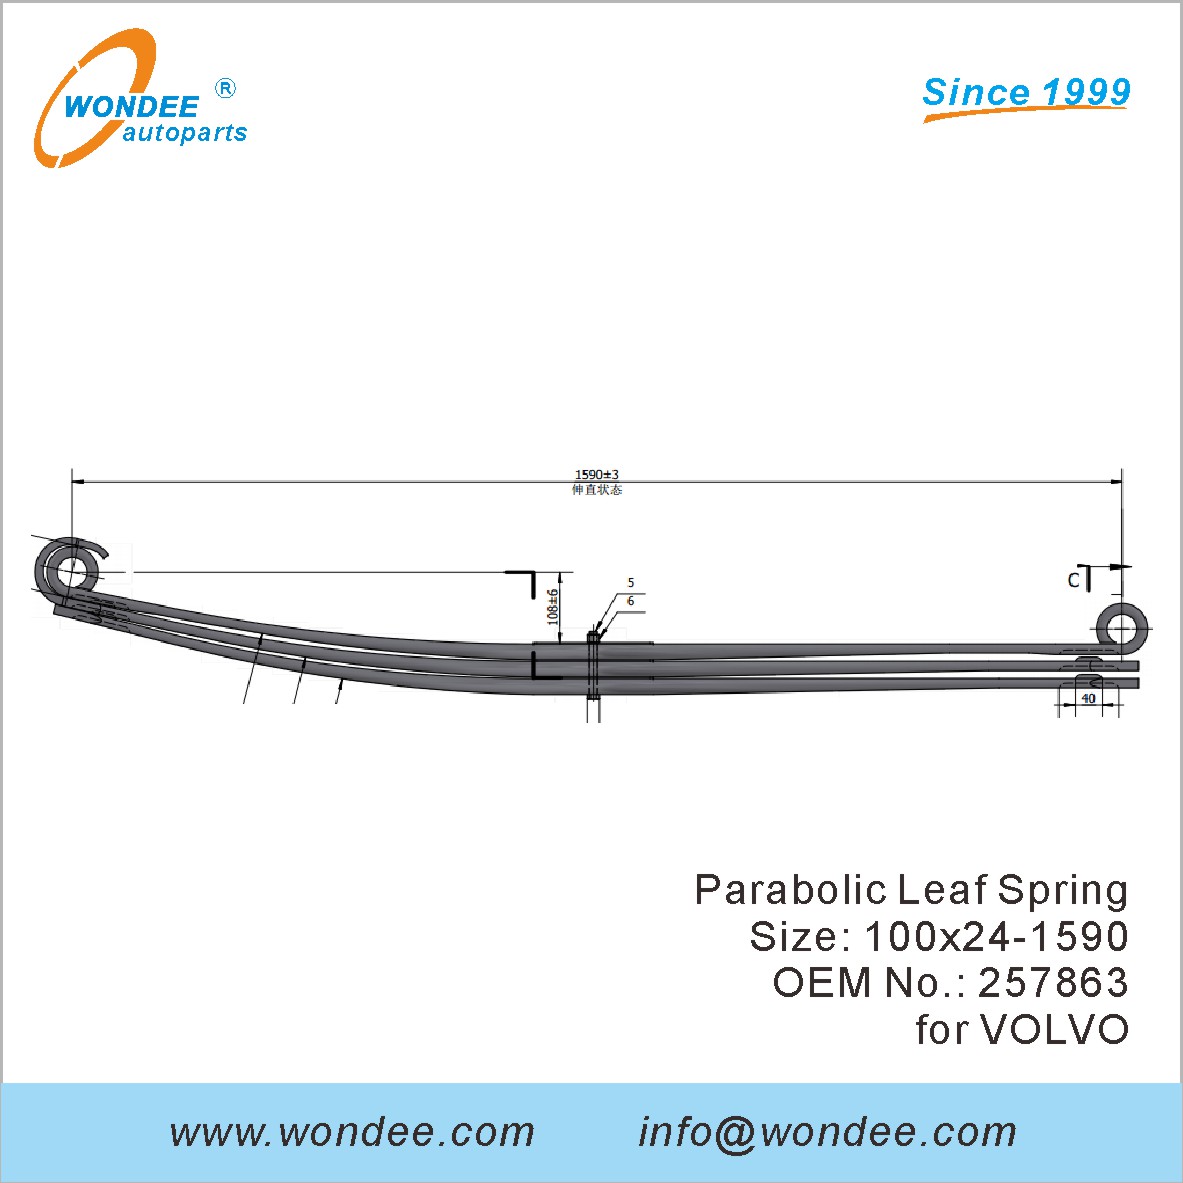 WONDEE heavy duty parabolic Leaf Spring OEM 257863 for VOLVO